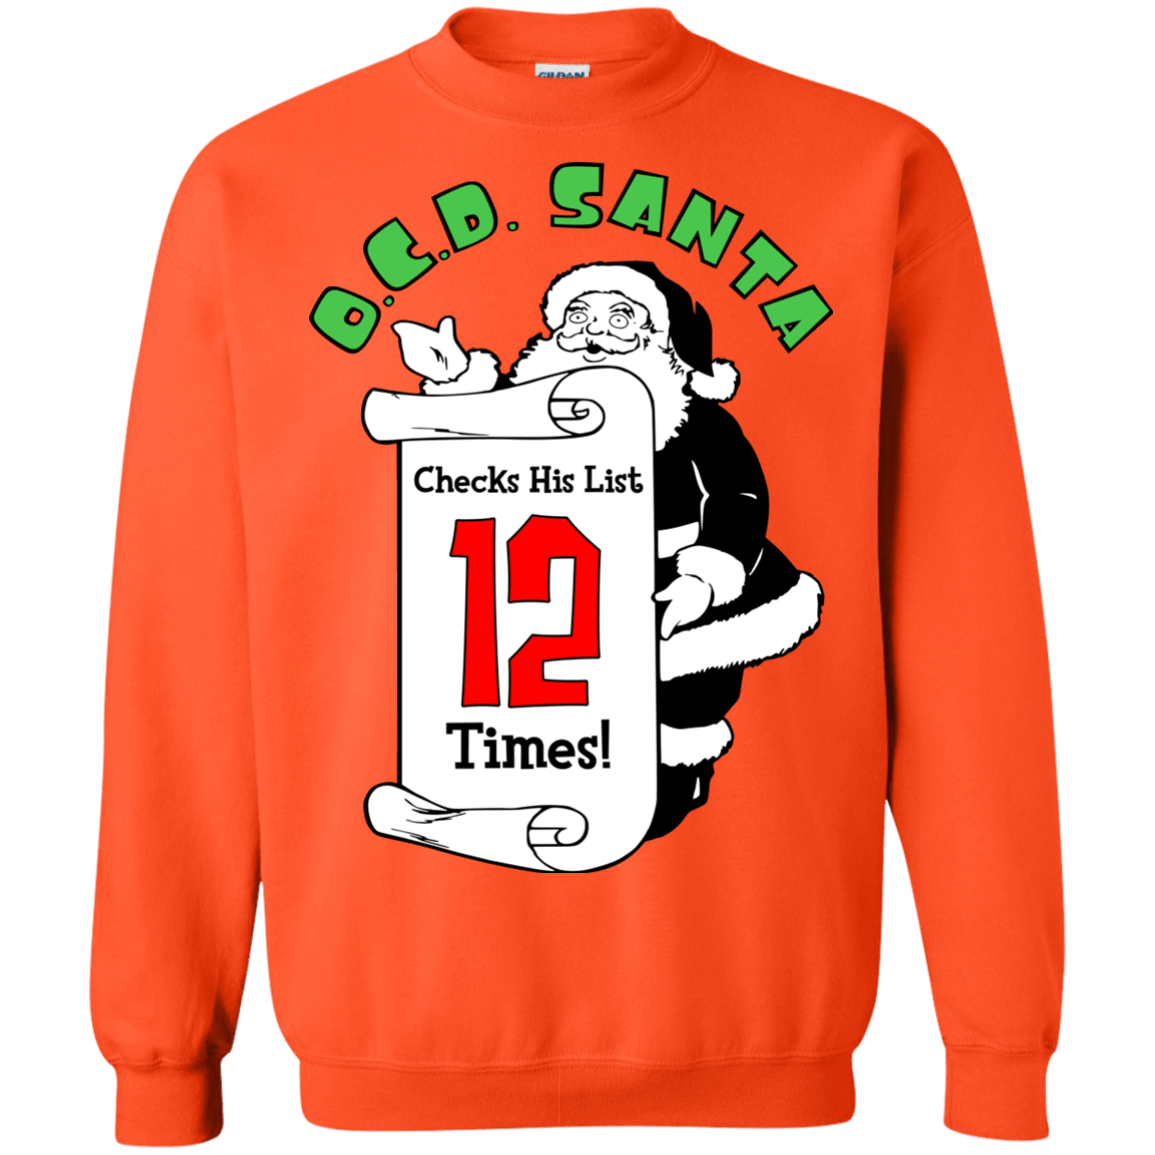 Sweatshirts Orange / Small OCD Santa Crewneck Sweatshirt